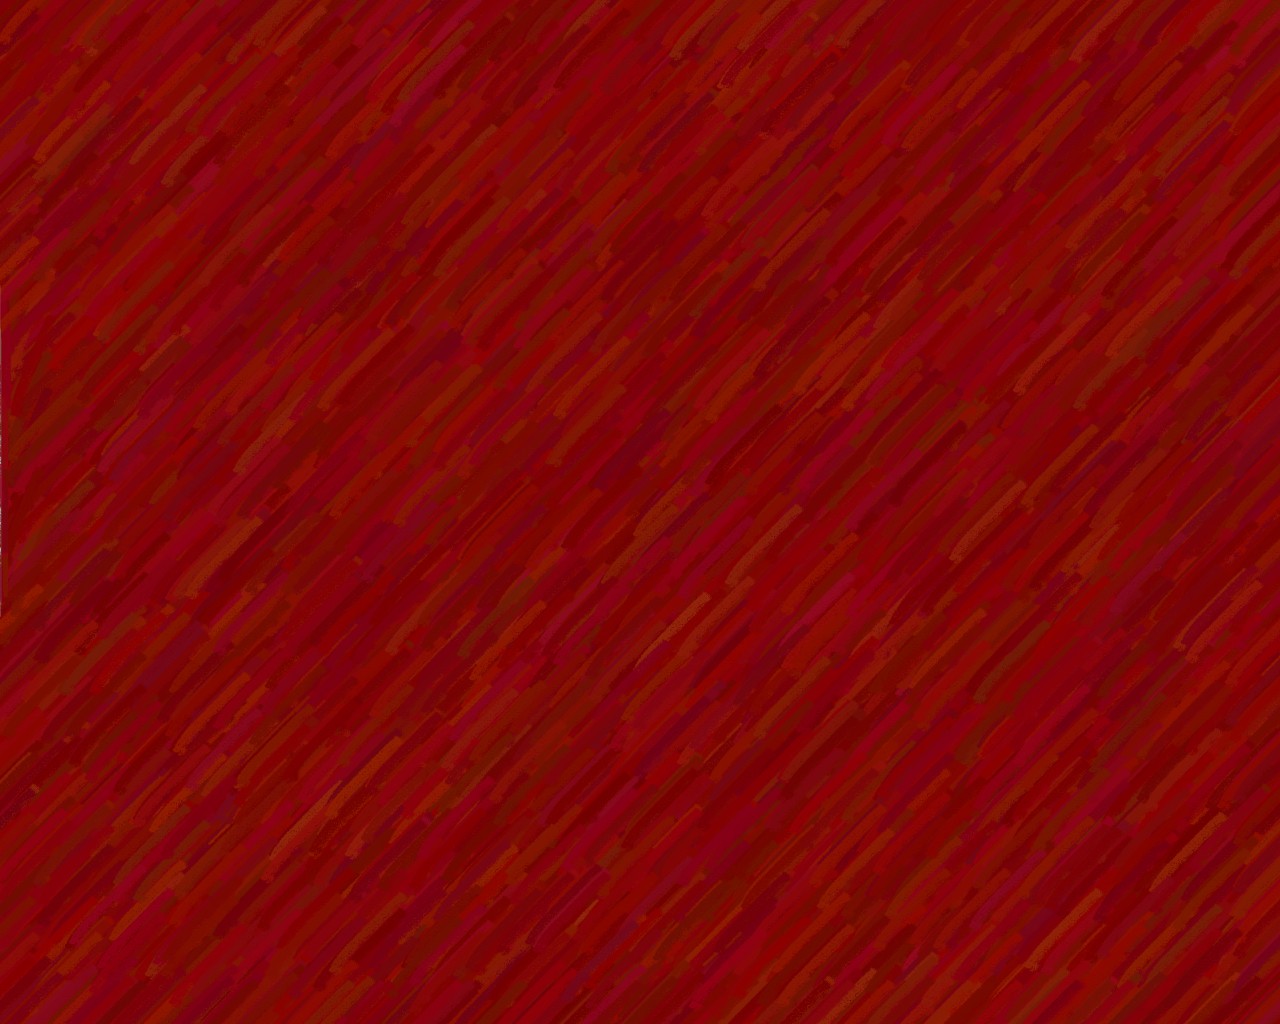 10+ Ide Background Merah Polos Hd - Gambar Keren